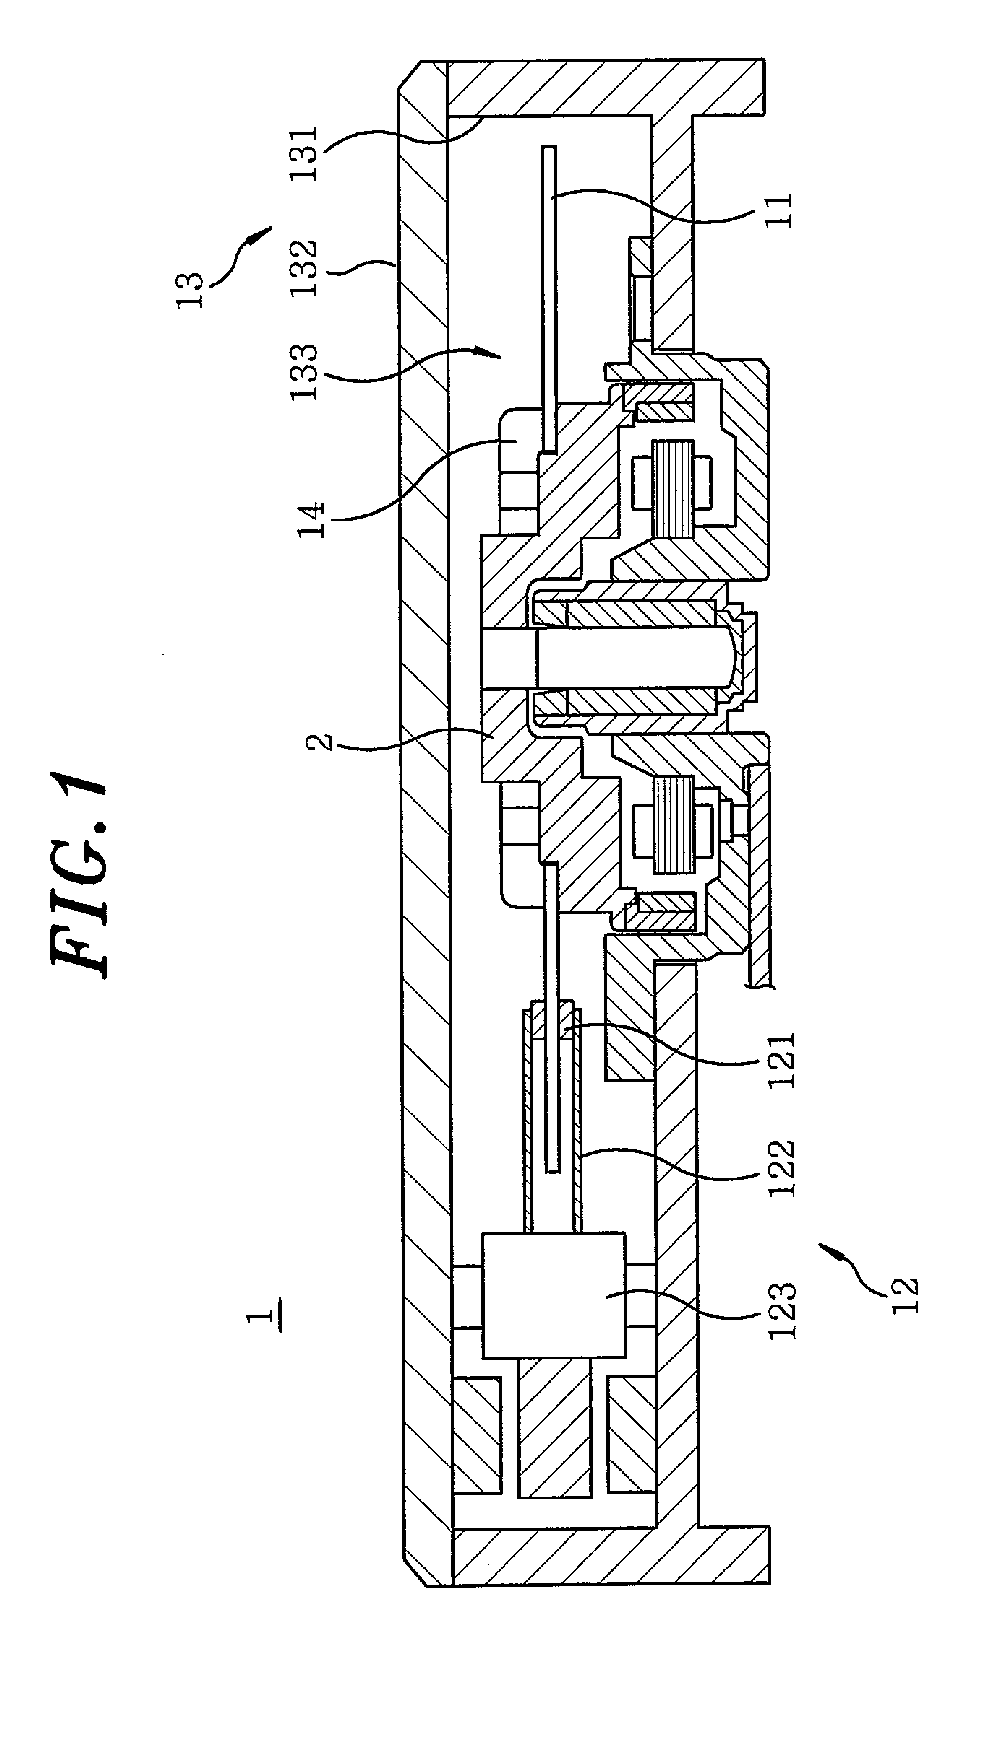 Bearing mechanism, motor and storage disk drive apparatus